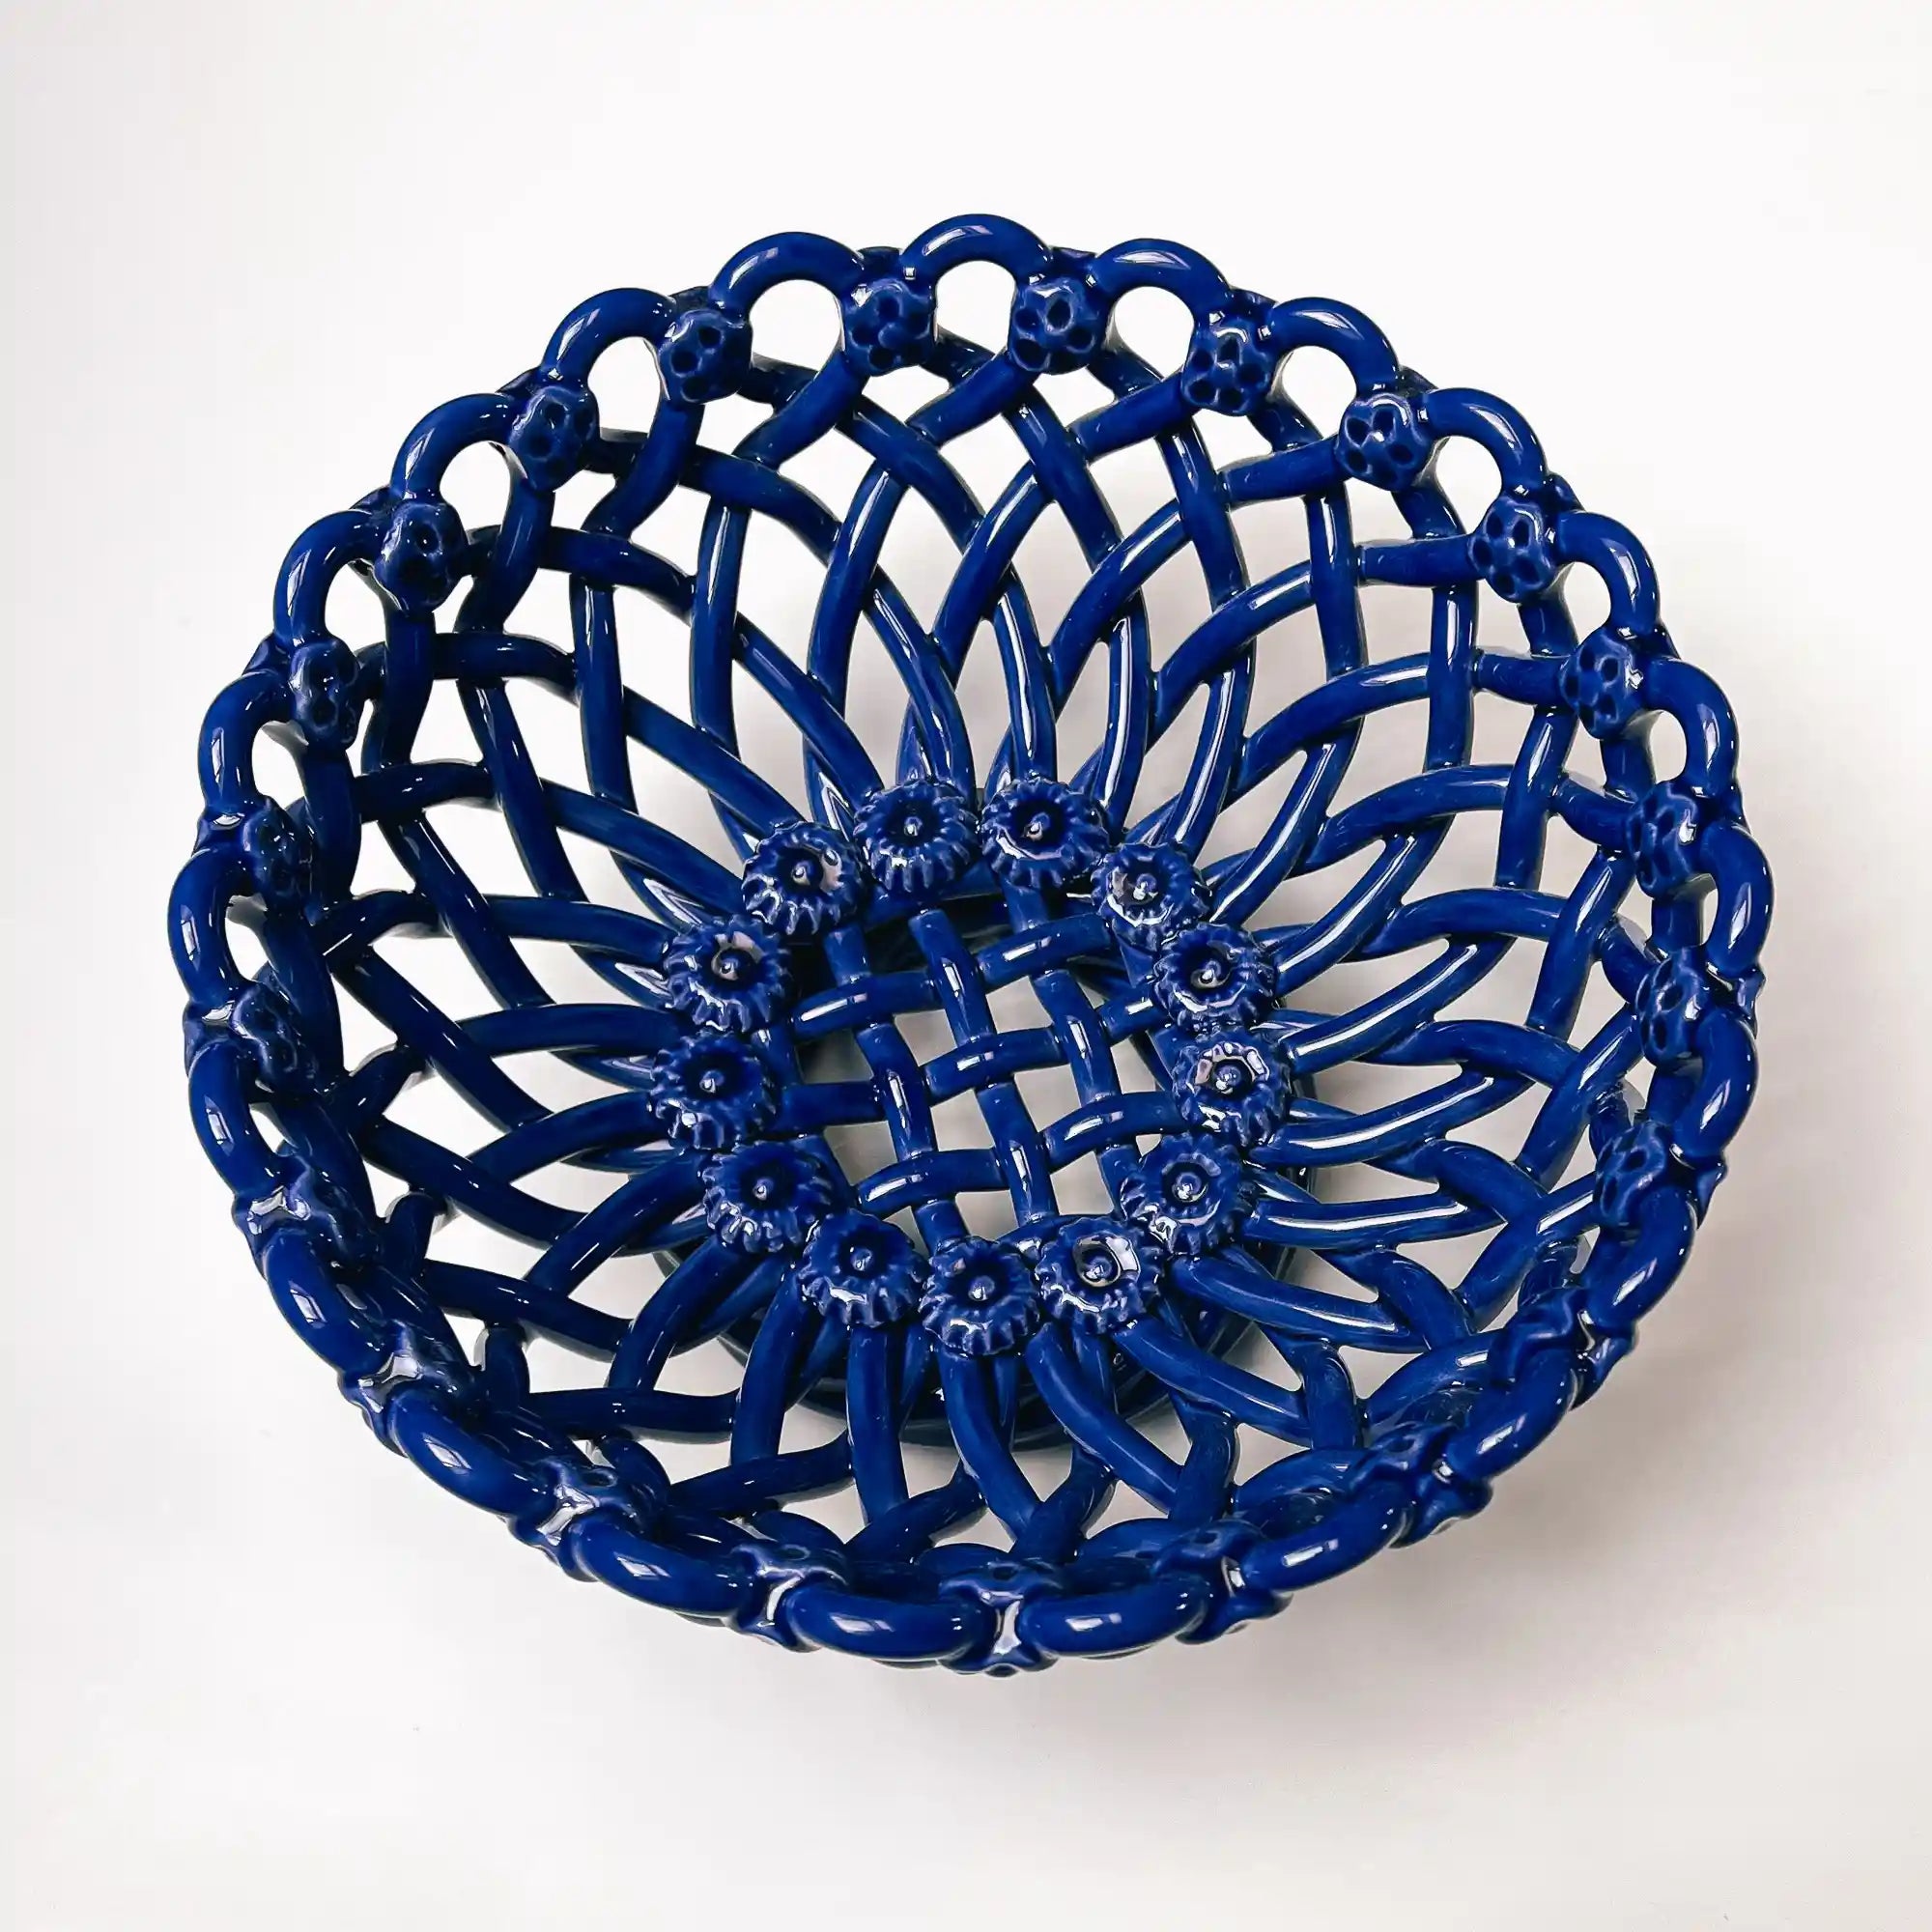 Iconic woven basket without base